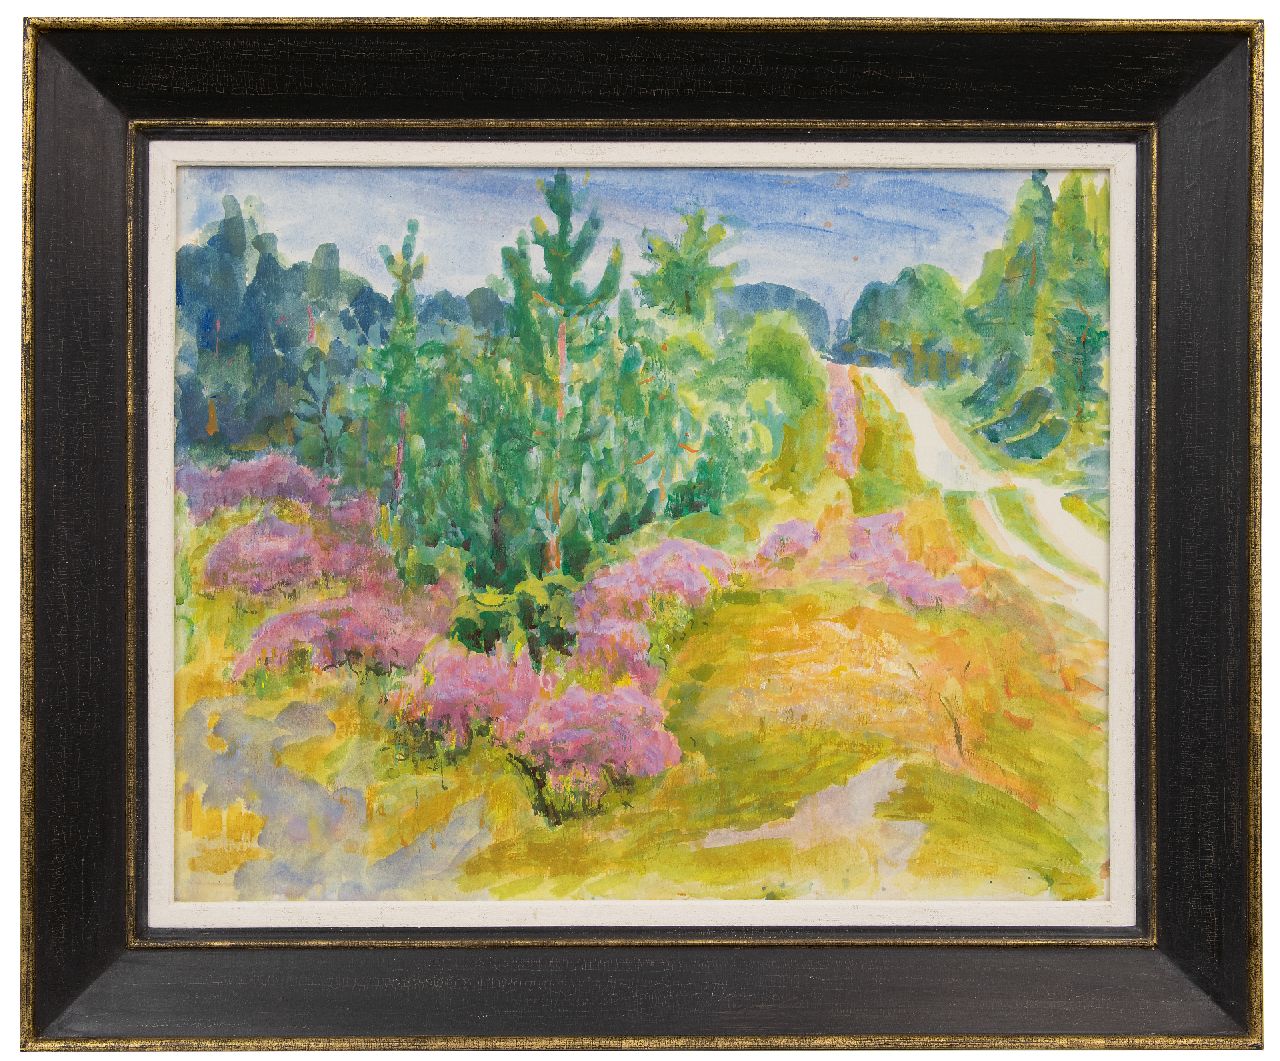 Altink J.  | Jan Altink, Landweg door dennenbos en bloeiende heide, aquarel op papier 54,9 x 69,8 cm